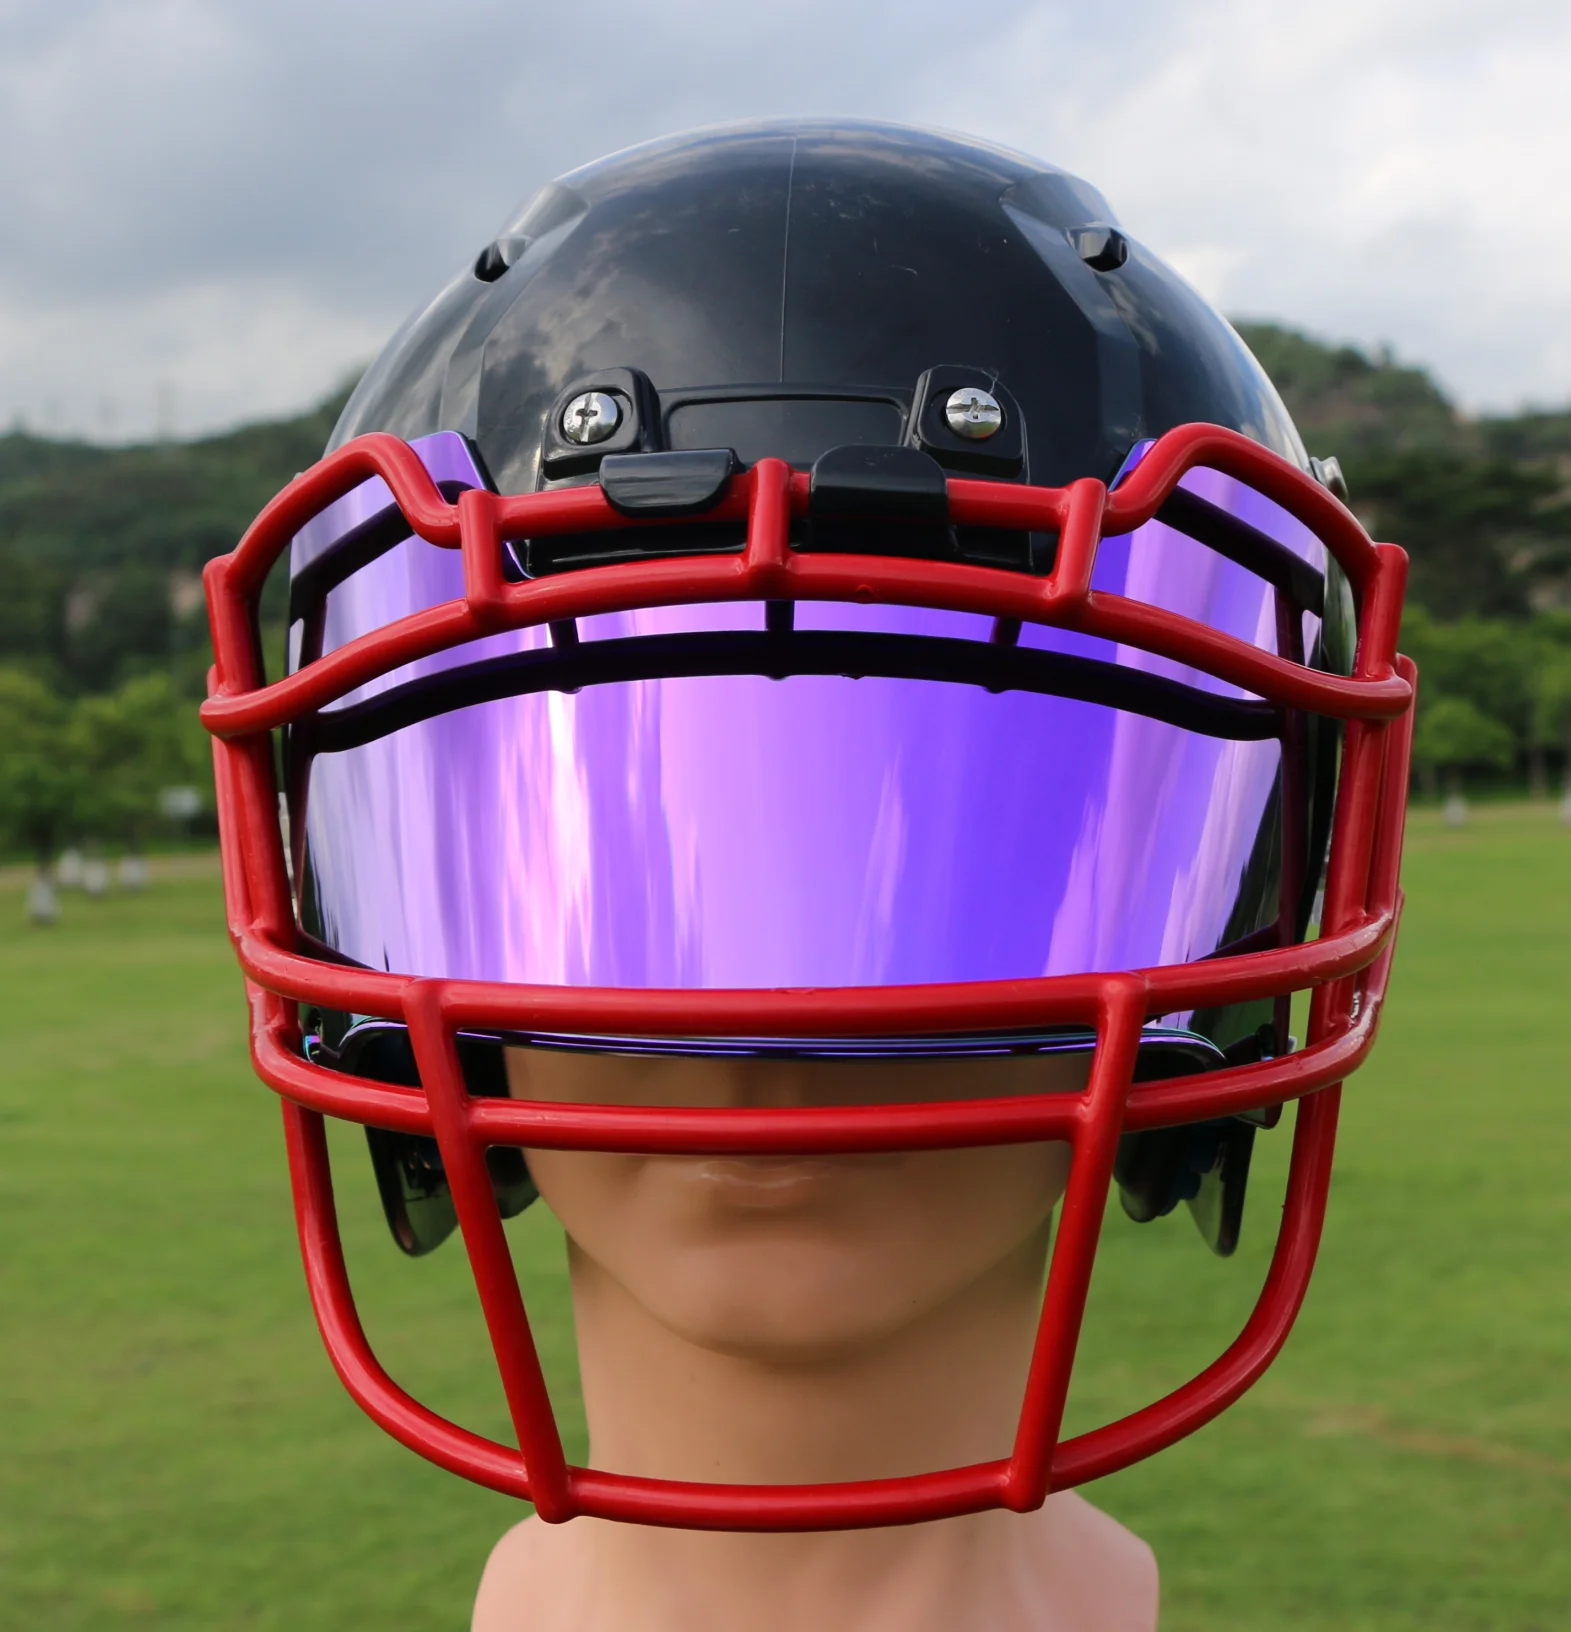 Loudmouth Football Visor - Universal Fit Youth & Adult Football Helmet Visor (Blue)